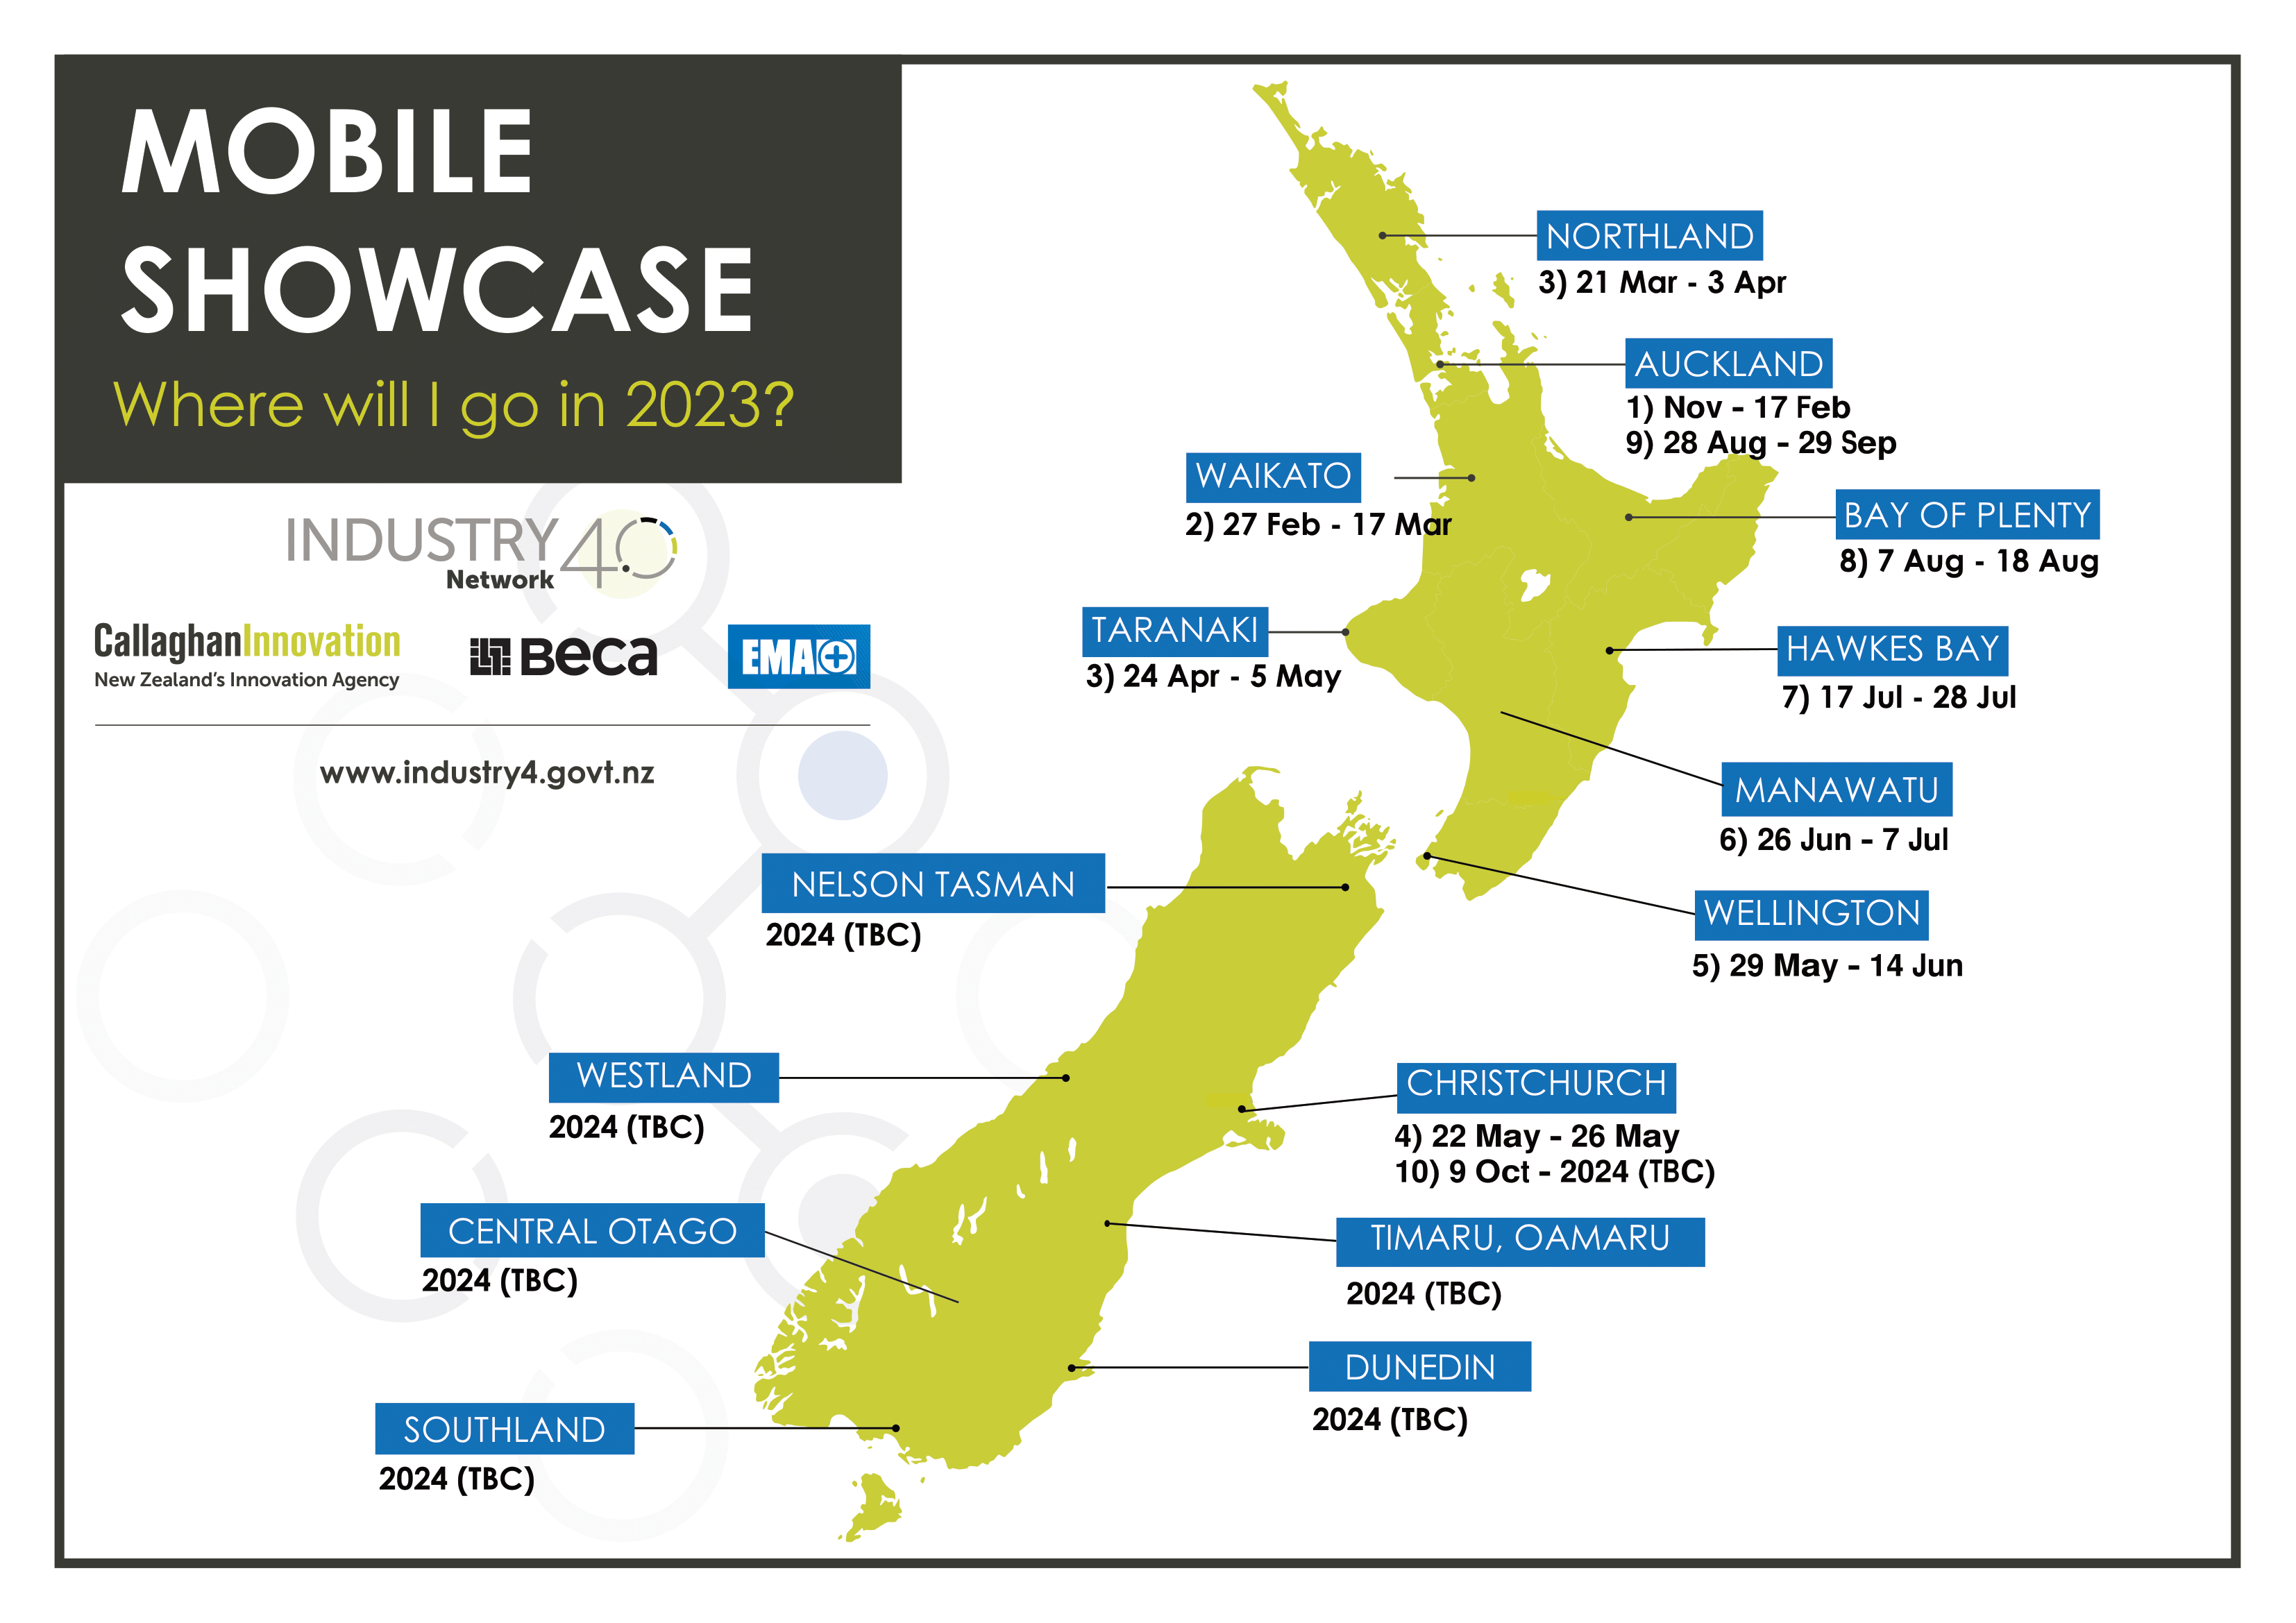 locations where the Mobile Showcase will go